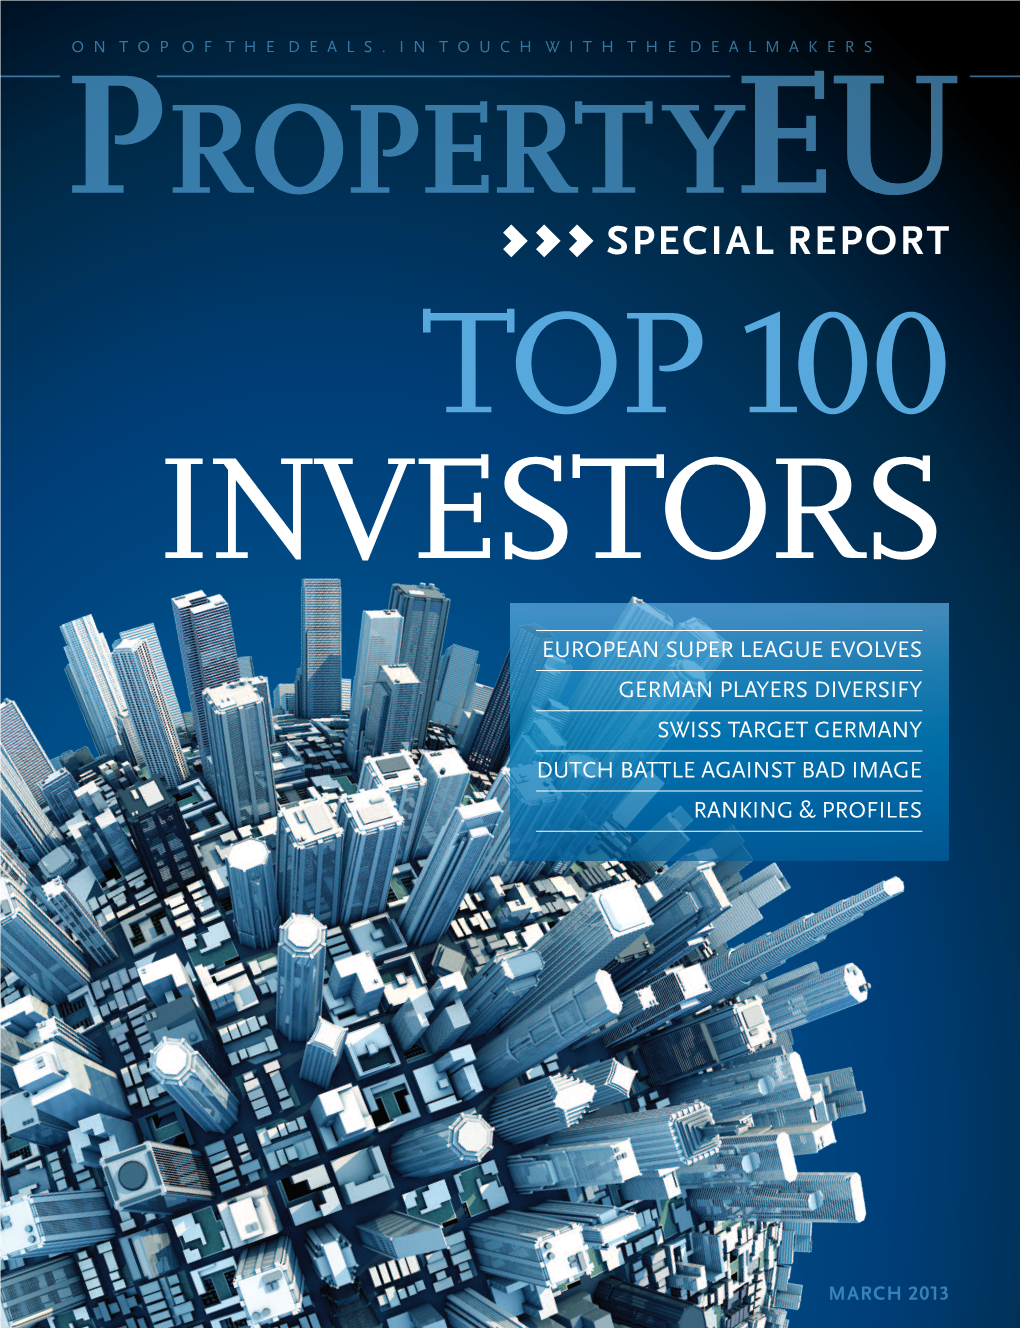 Special Report Top 100 Investors